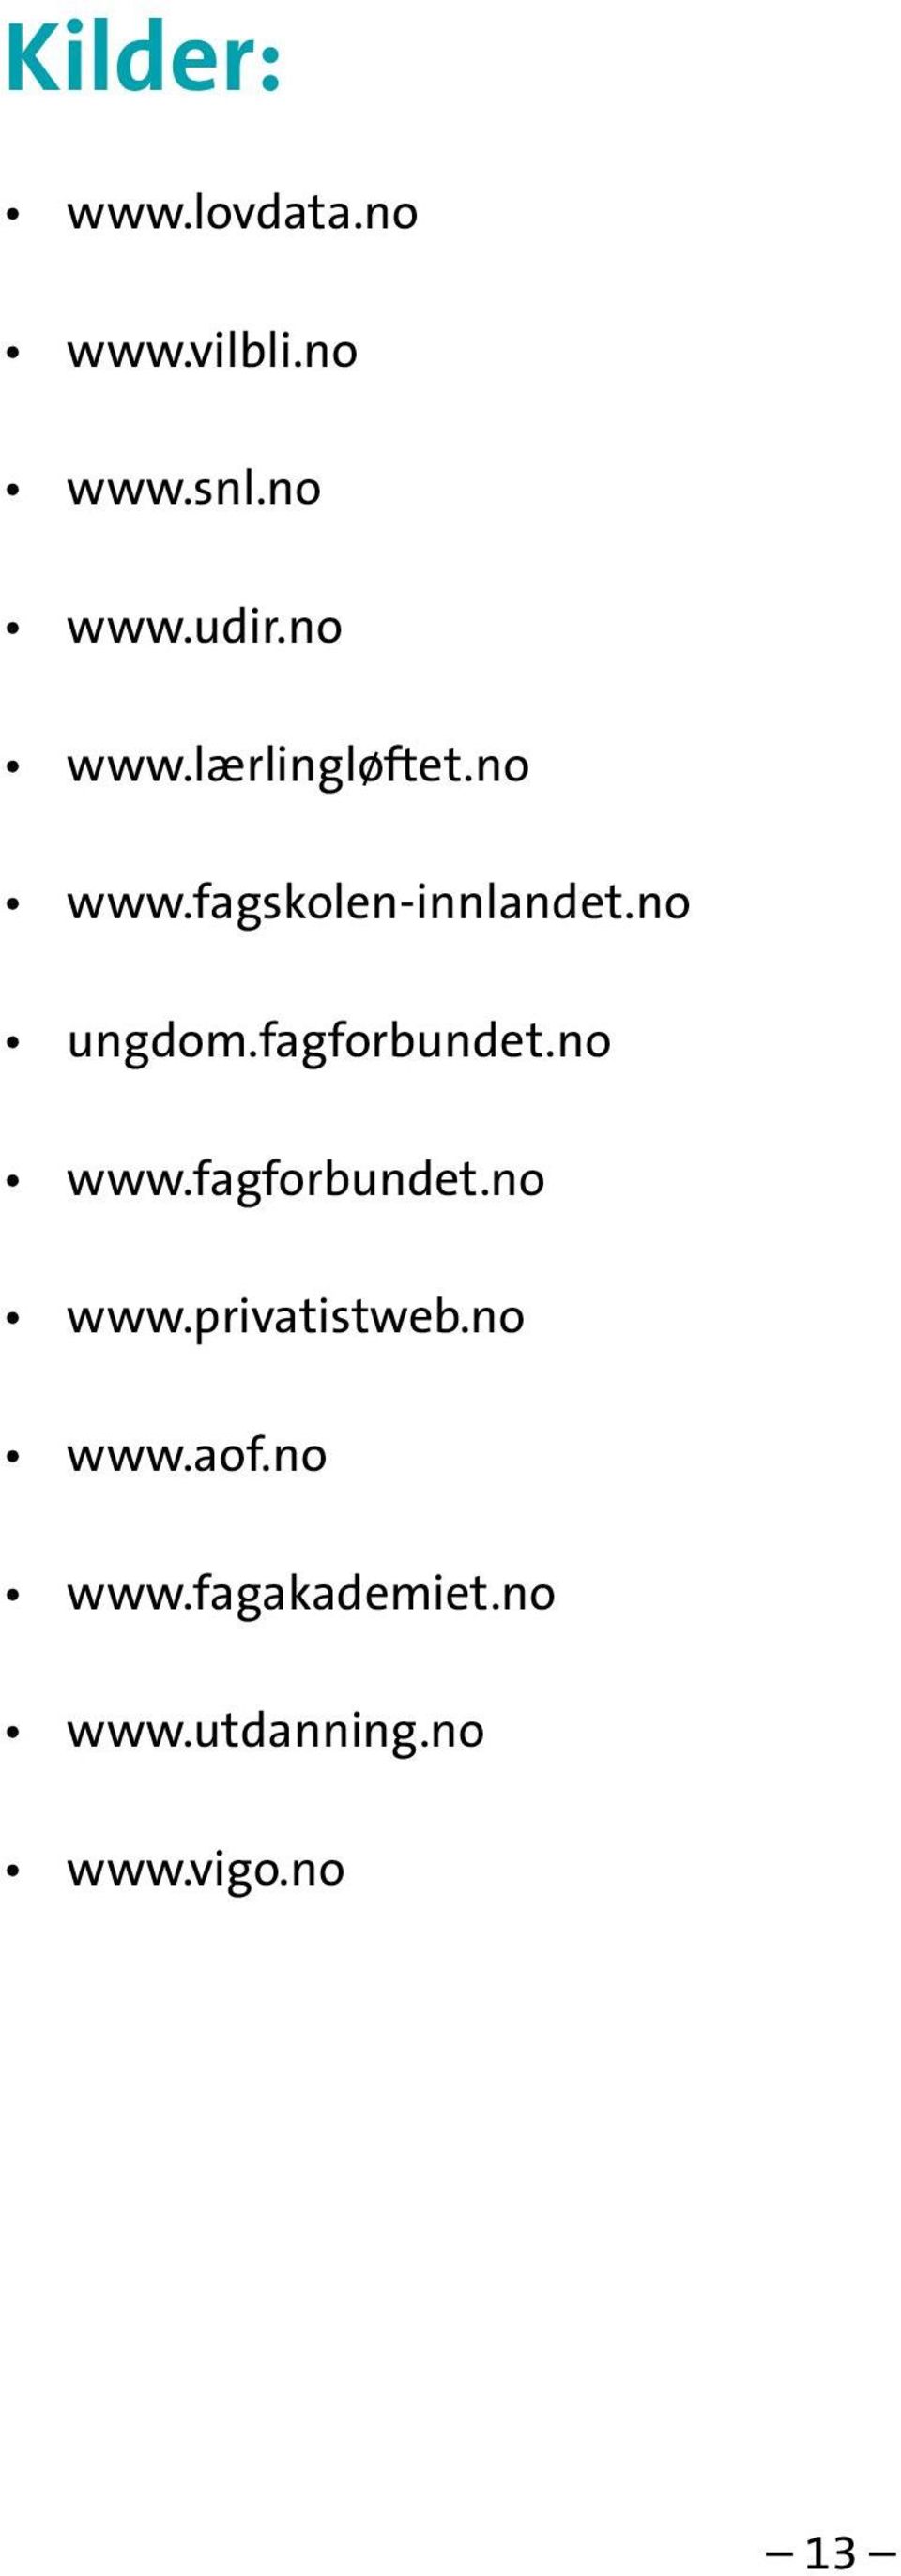 fagforbundet.no www.fagforbundet.no www.privatistweb.